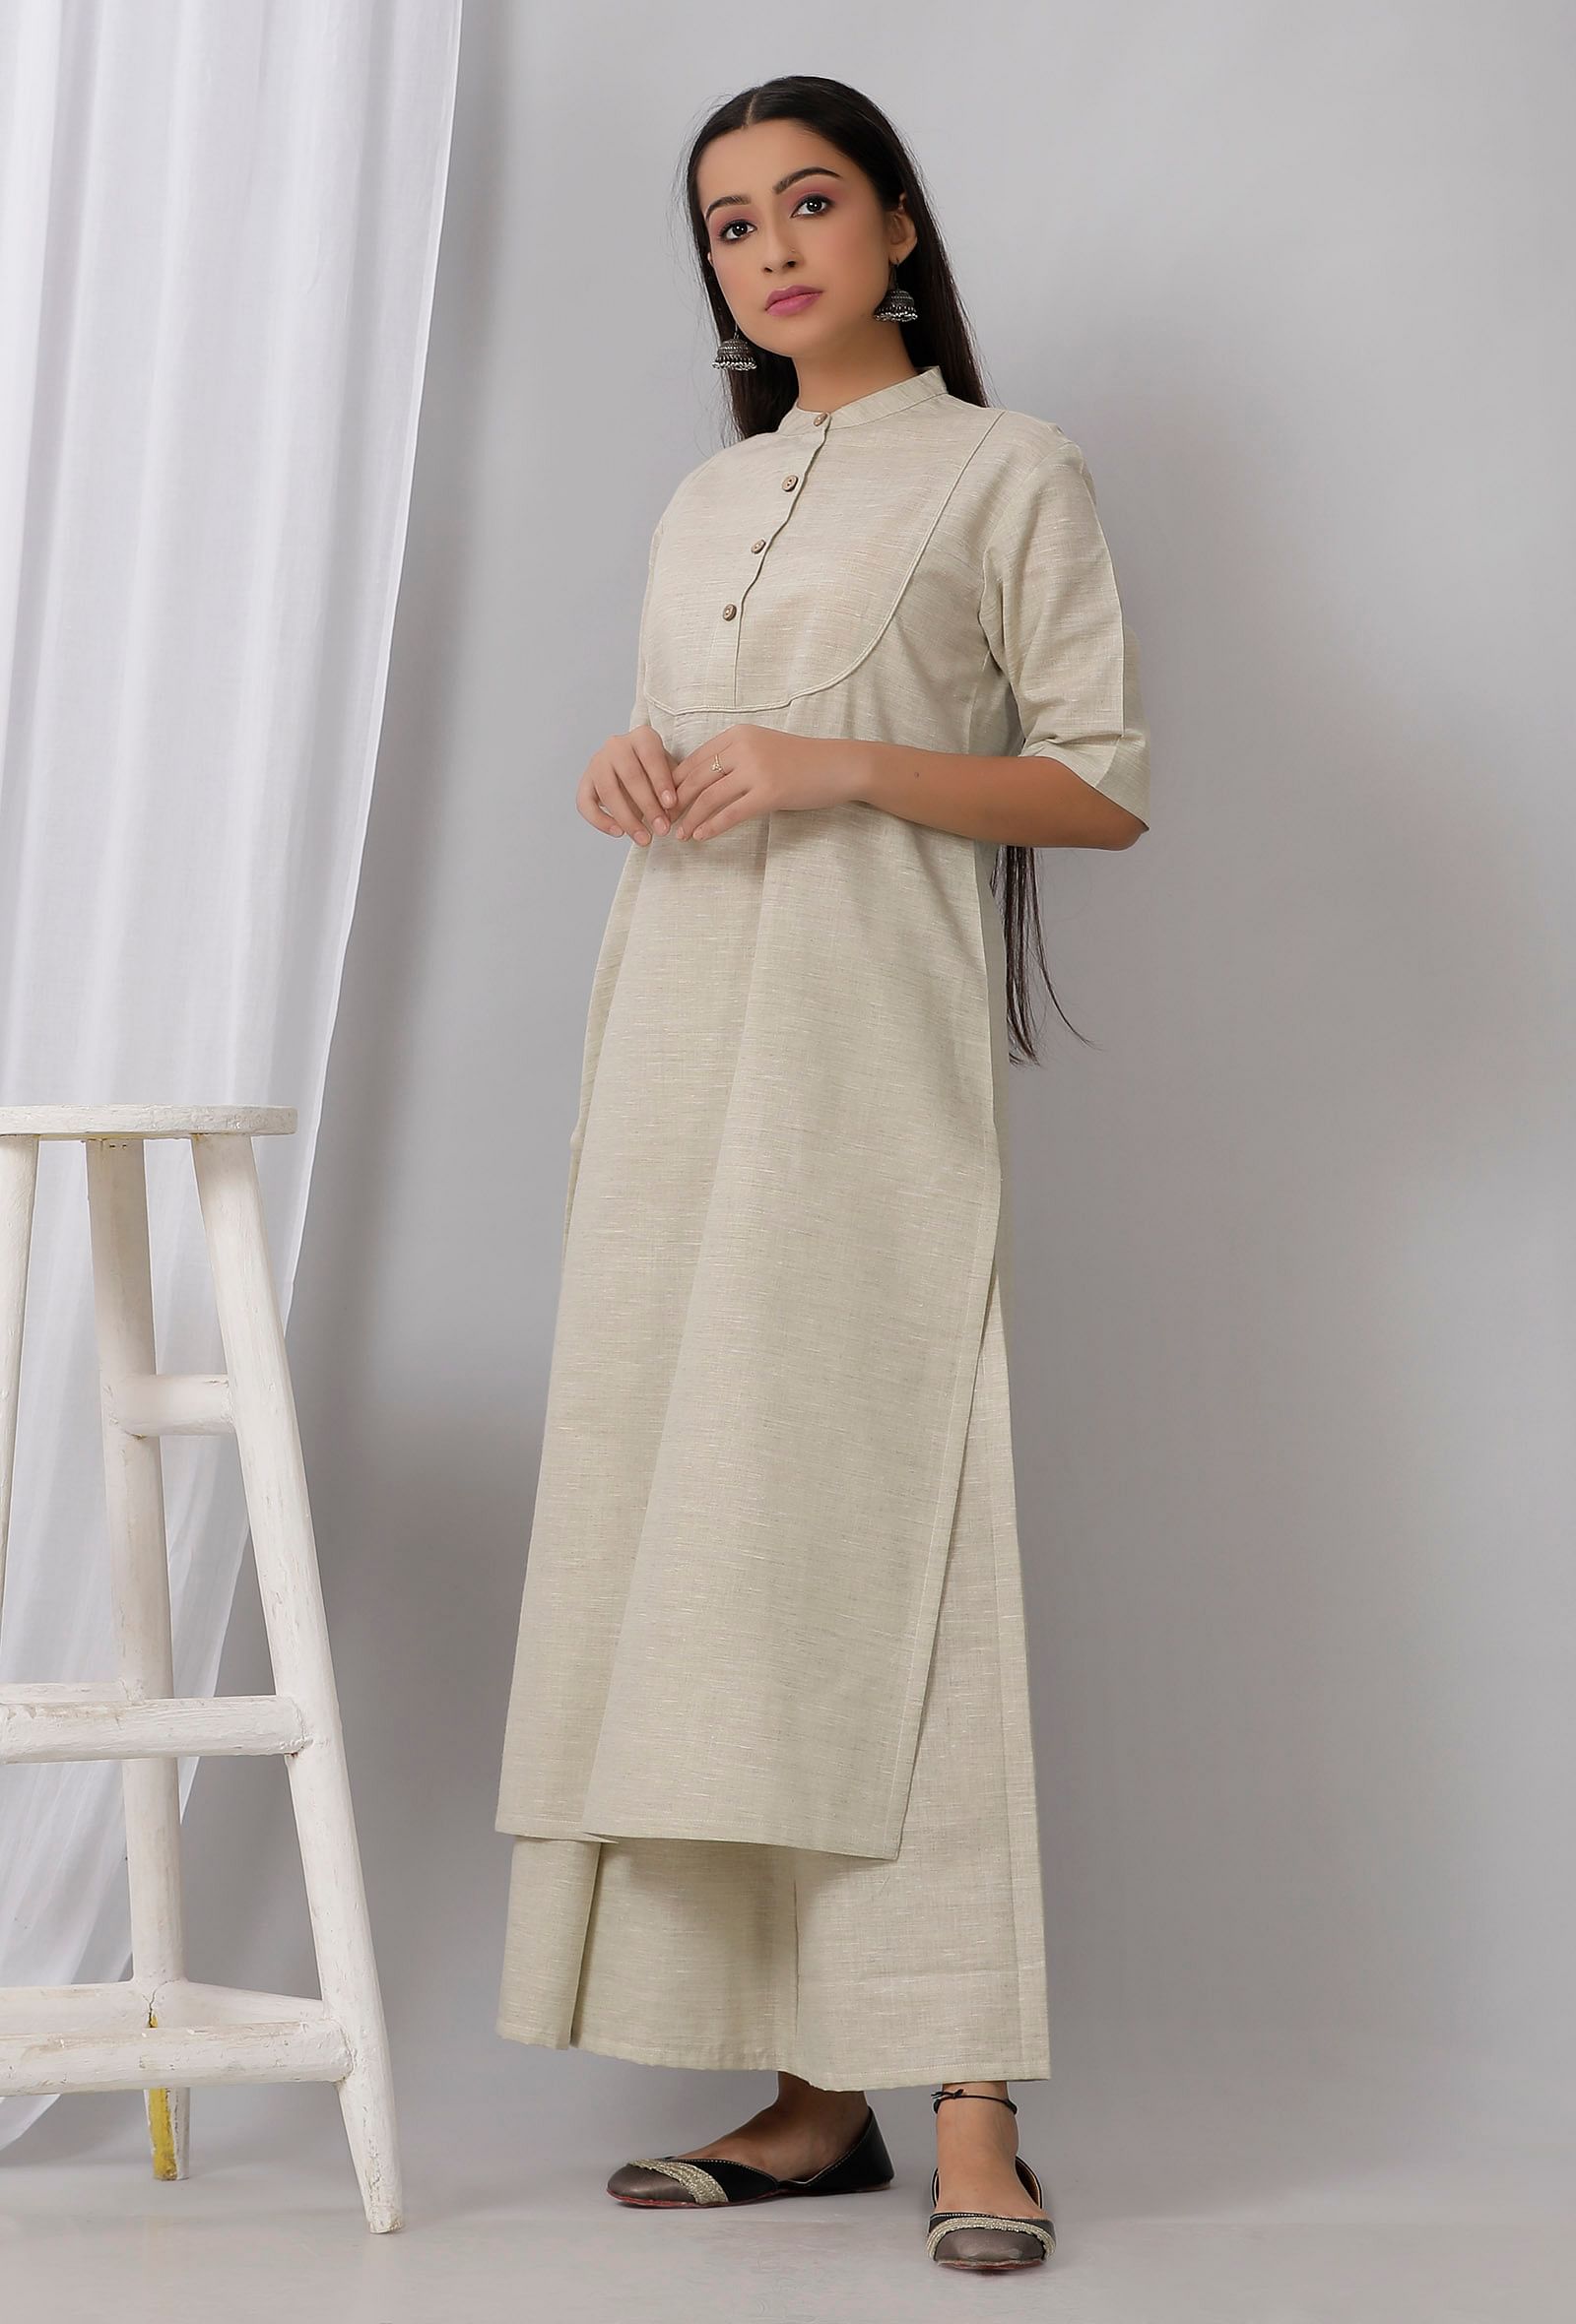 Buy Online at Jaypore.com | Boutique dress designs, Cotton kurti designs,  Work wear women